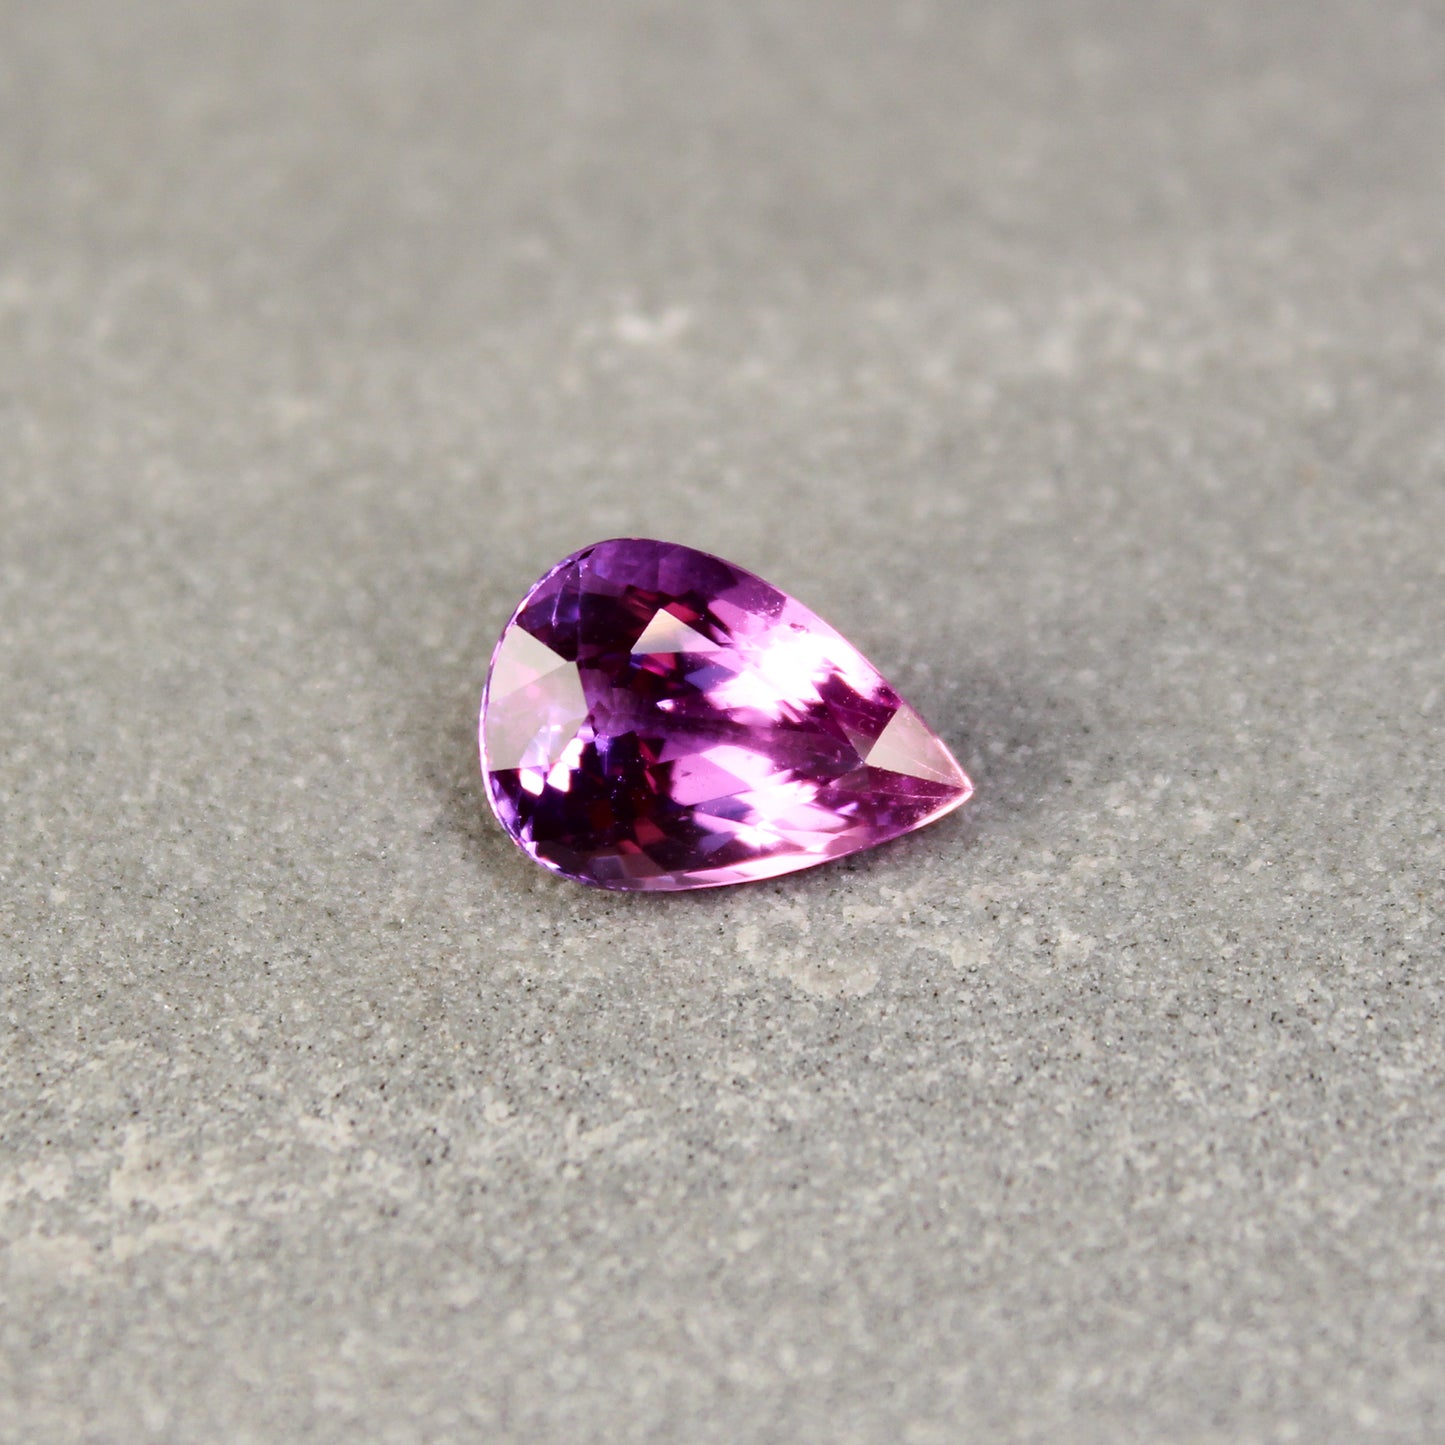 2.83ct Pink, Pear Shape Sapphire, Heated, Madagascar - 10.45 x 7.32 x 5.28mm